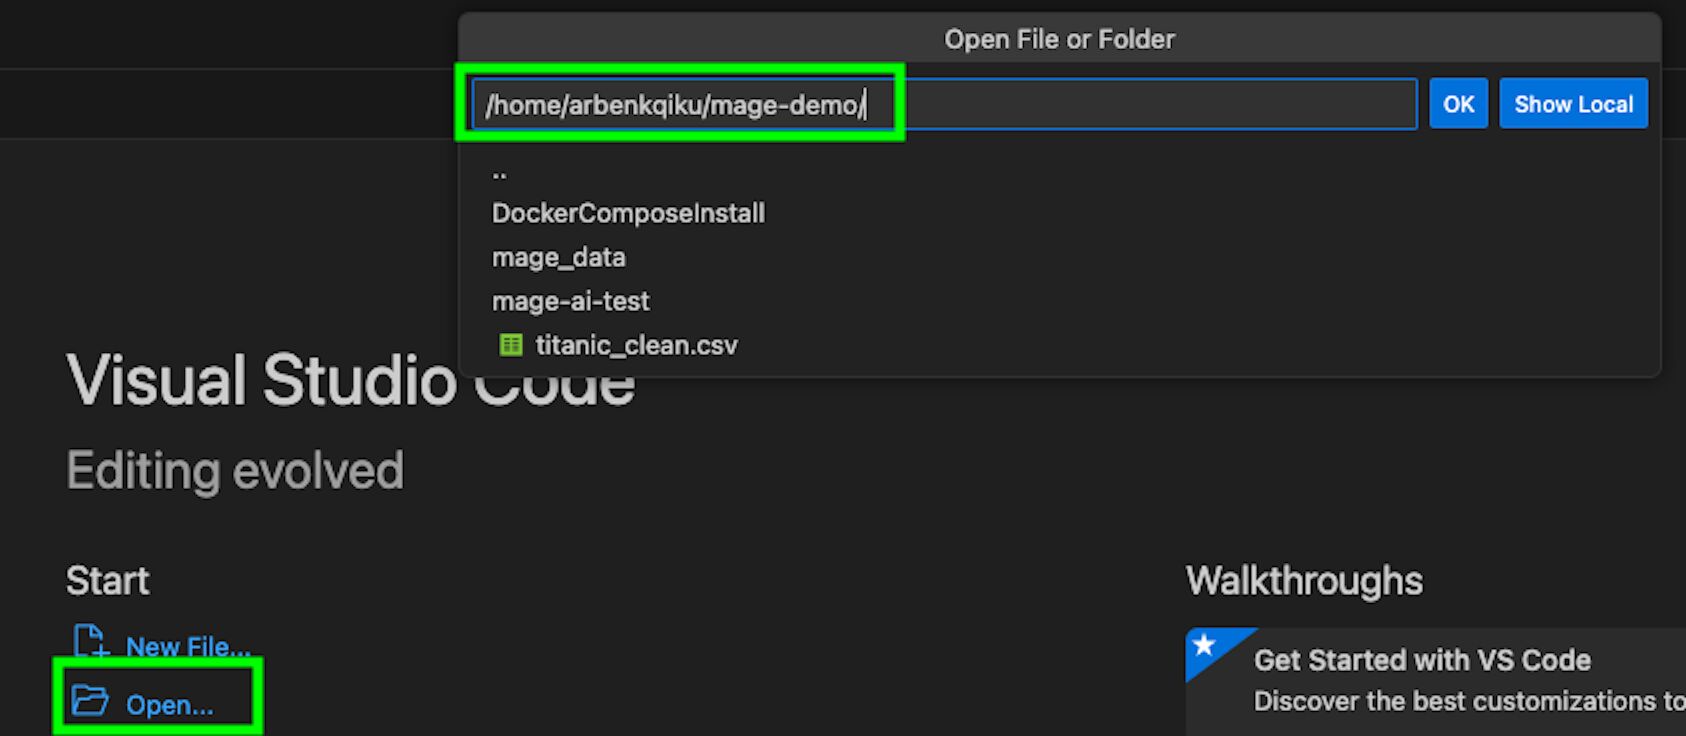 Open file or folder